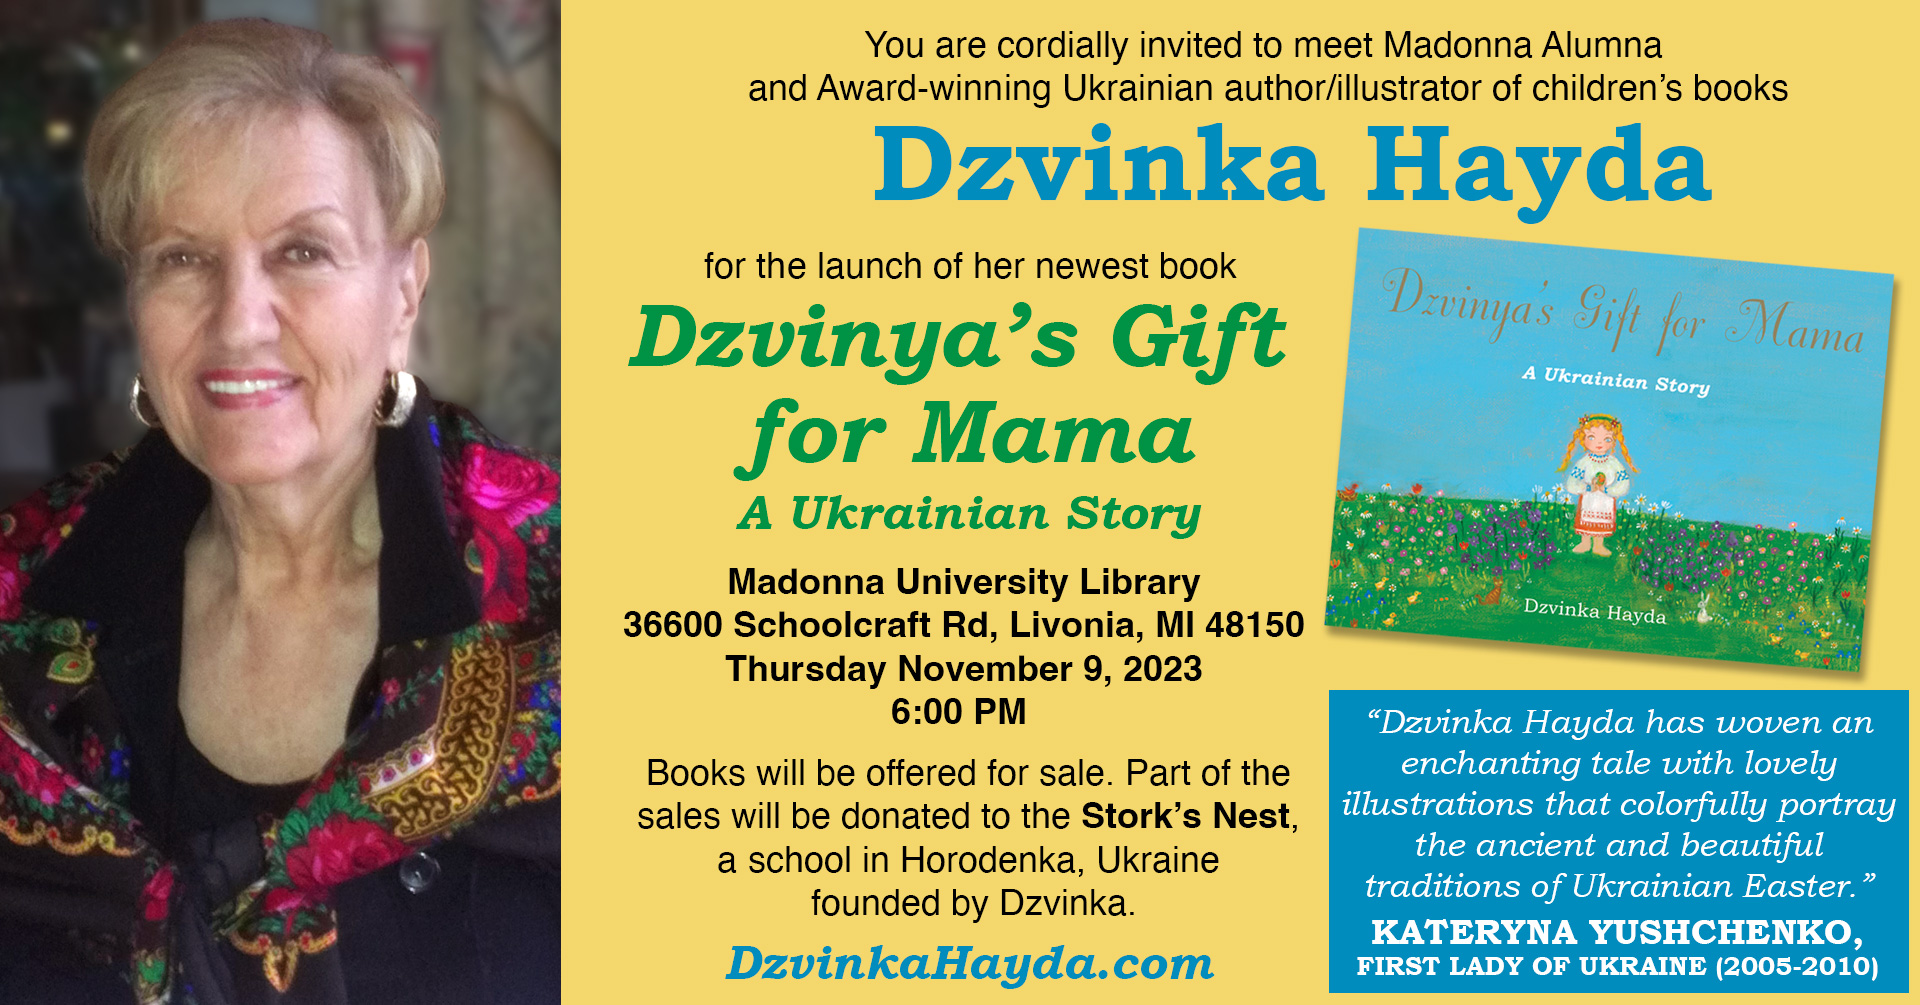 Launch of the book "Dzvinya's Gift for Mama"